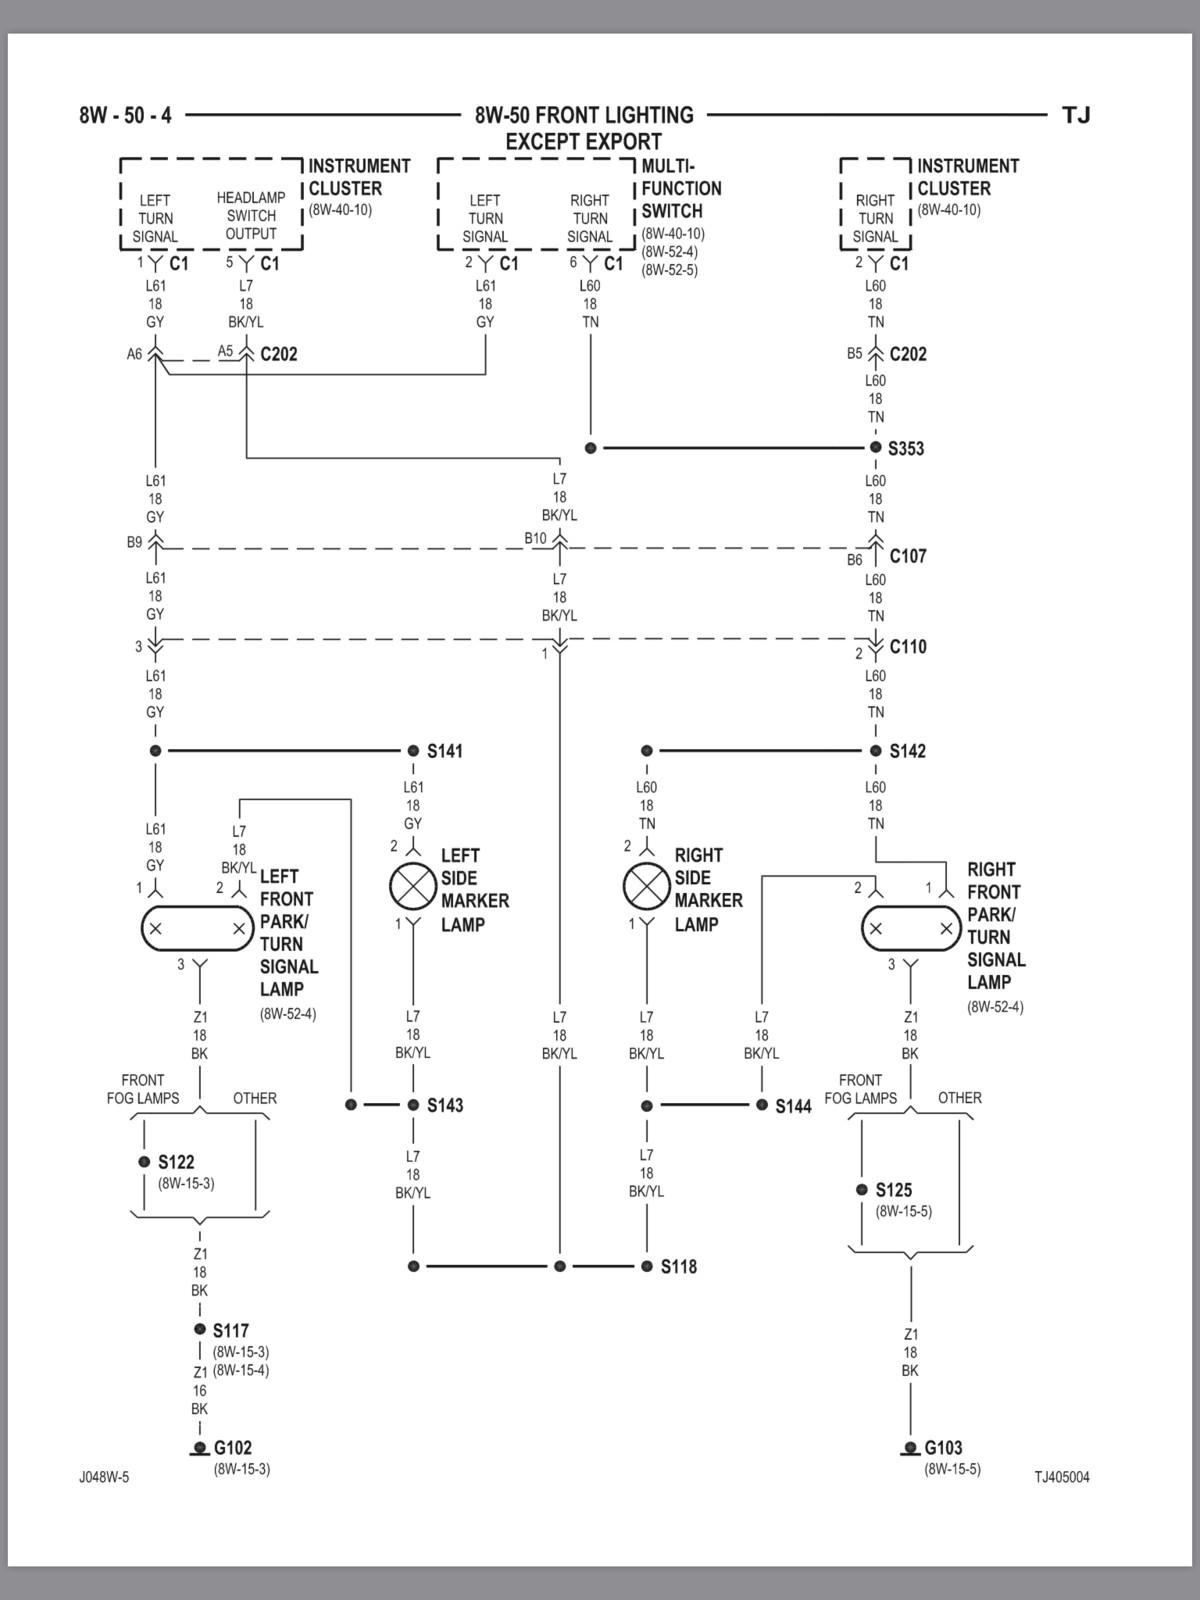 Basic Turn Signal Wiring Diagram Military Turn Signal Switch Wiring Diagram Wiring Diagram Of Basic Turn Signal Wiring Diagram